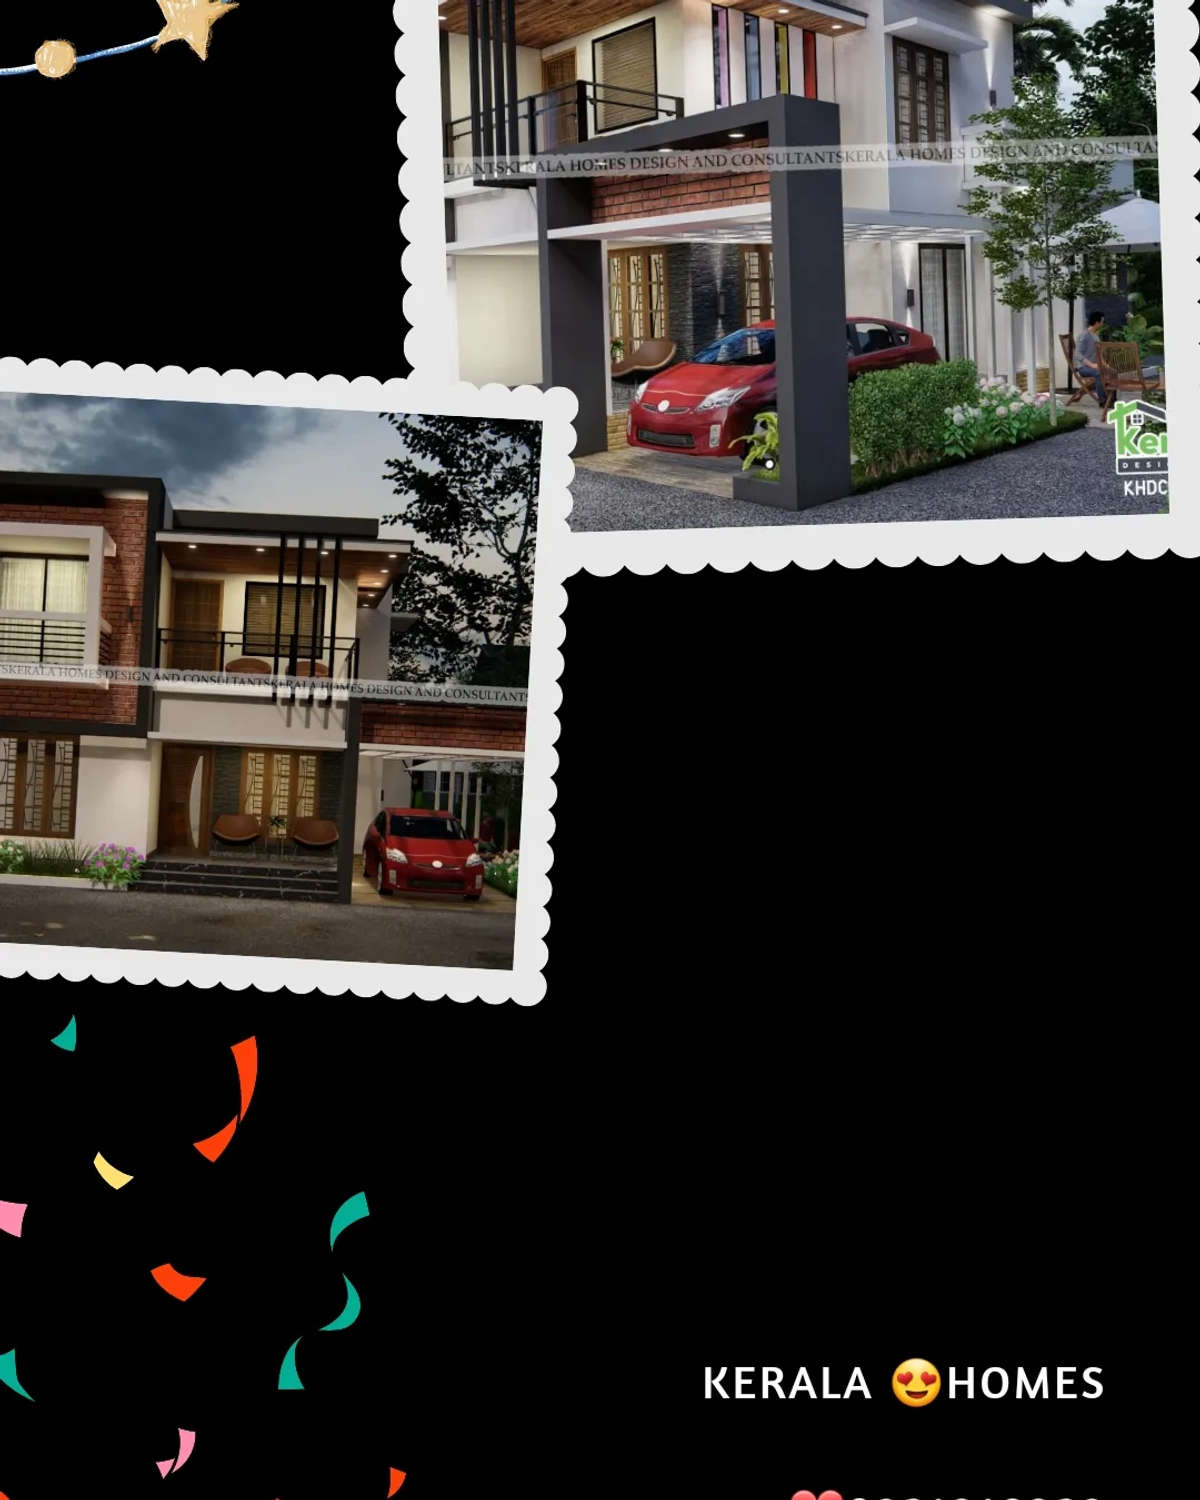 3D visualization🌺🌺🌺🌺
  🍁3D exterior🌺🌺🌺🌺
  🍁3D interior🌺🌺🌺🌺
  🍁🌺🌺🌺🌺🌺🌺🌺🌺

      😍 നിങ്ങളുടെ വീടിന്റെ പ്ലാൻ,
            3D exterior /interior
            ഏതും ആക്കട്ടെ നിങ്ങളുടെ
            അഭിരുചി അനുസരിച്ചു
            വളരെ മനോഹരമായി
            ഡിസൈൻ 😍😍ചെയ്യുന്നു...

Contact.
Ph:8️⃣9️⃣2️⃣1️⃣0️⃣1️⃣6️⃣0️⃣2️⃣9️⃣
.🌹🌹🌹🌹🌹🌹🌹🌹🌹🌹🌹🌹🌹

#keralahome #design #construction
#entheweed #goodhome #arthome
#homestyle #indiahome #hophome
#Homedecor #game #childershome
#elevationhome #homebuilding
#keralavibes #architecture #khdc
#homepage #traditional #interior
#exterior #homesweet #instagrame #facebookhome #date #placehome